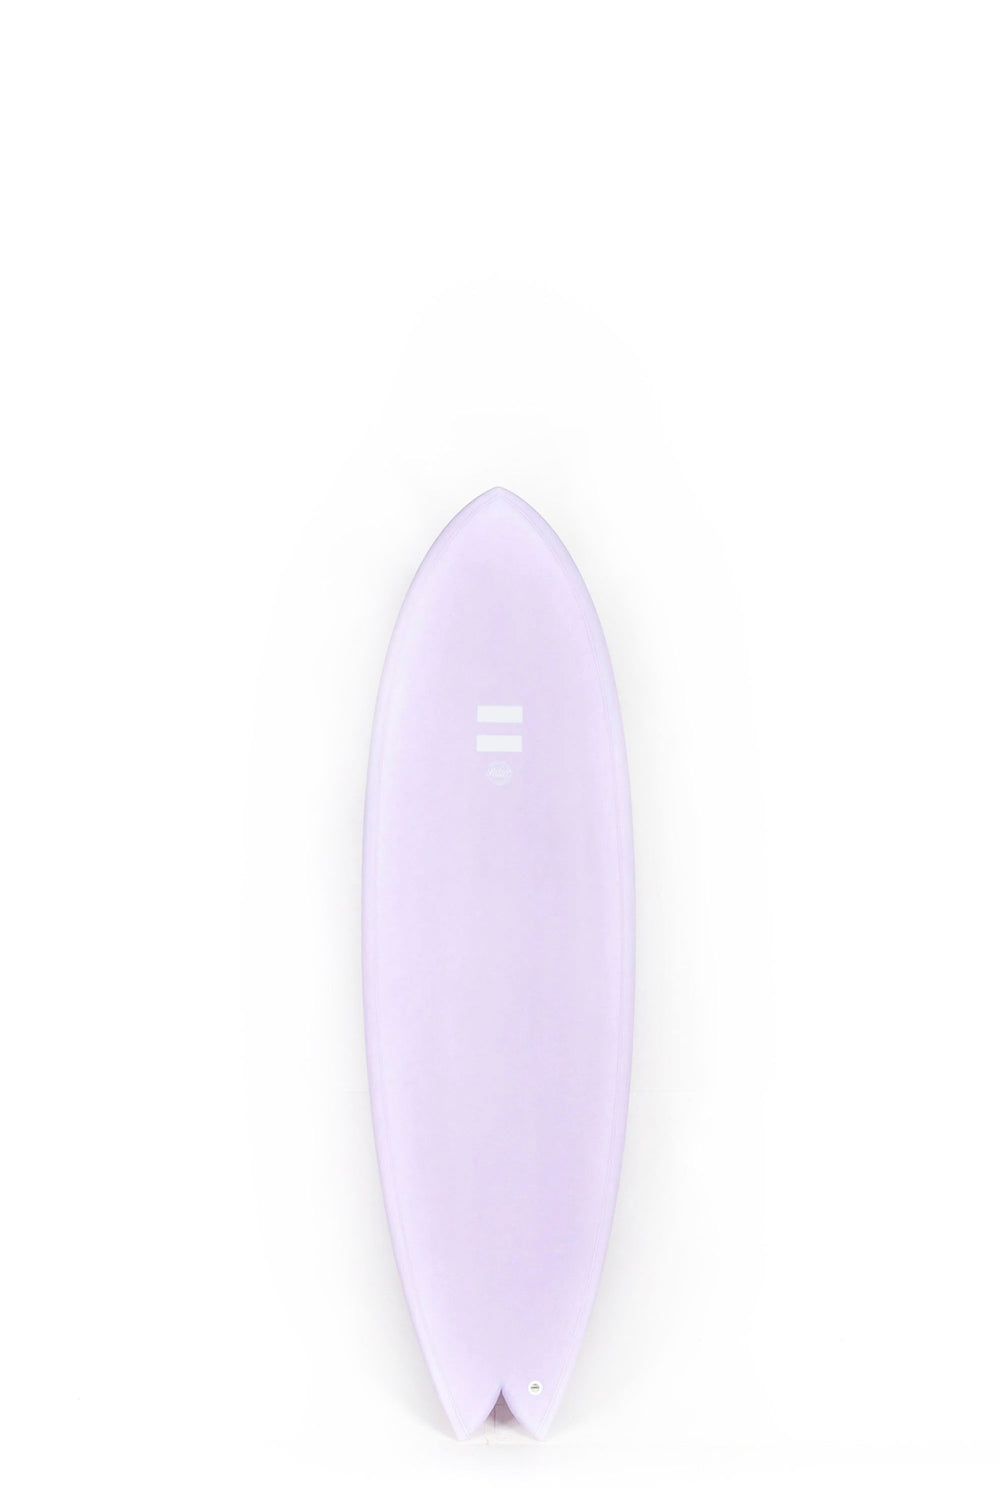 Indio Surfboards - COMBO Purple - 5'10